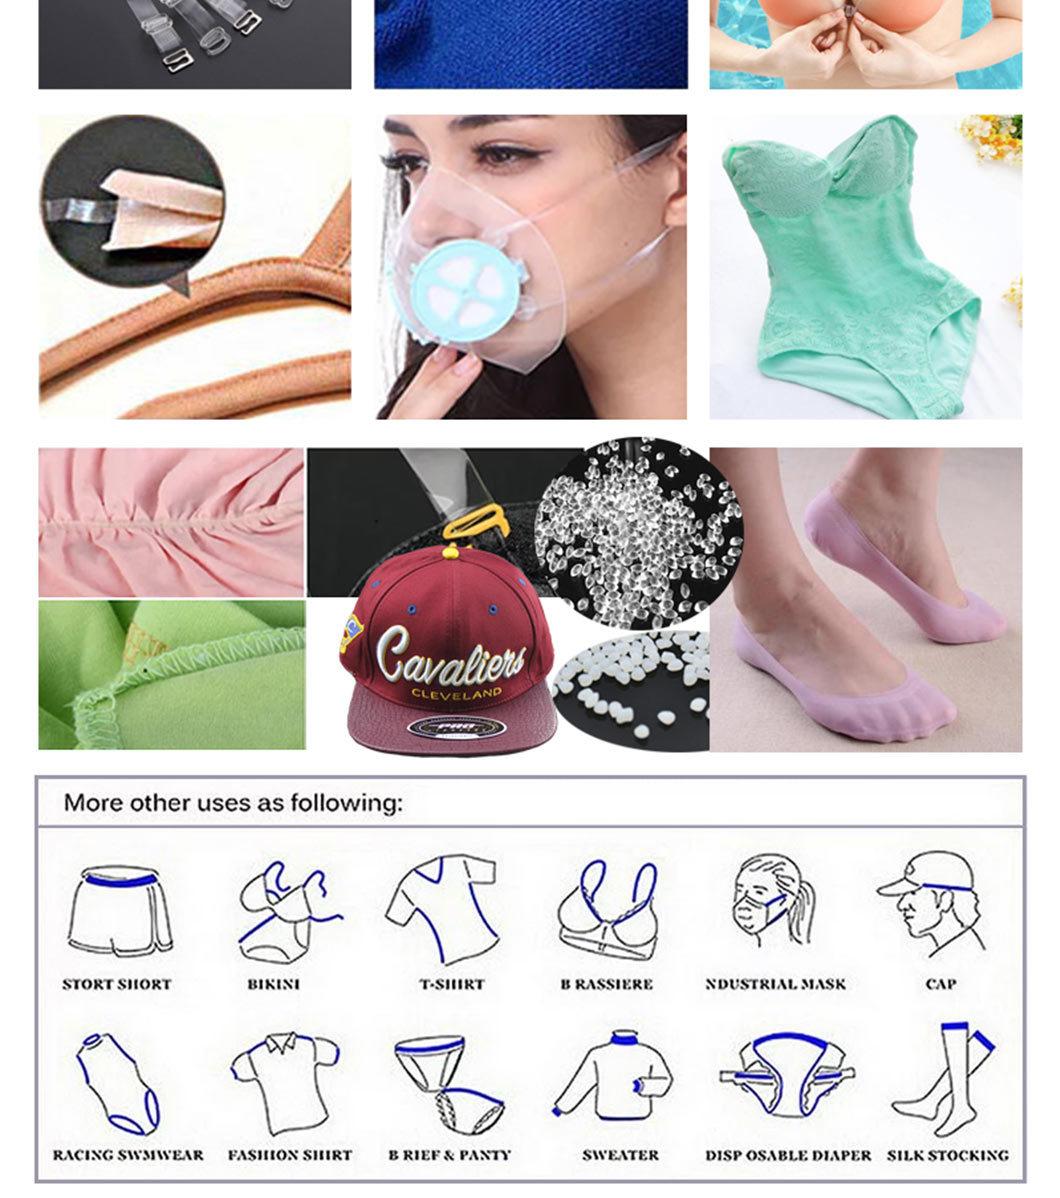 Sewing Elastic Mobilon Tape Thermoplastic Polyurethane Tape for Garment/Underwear